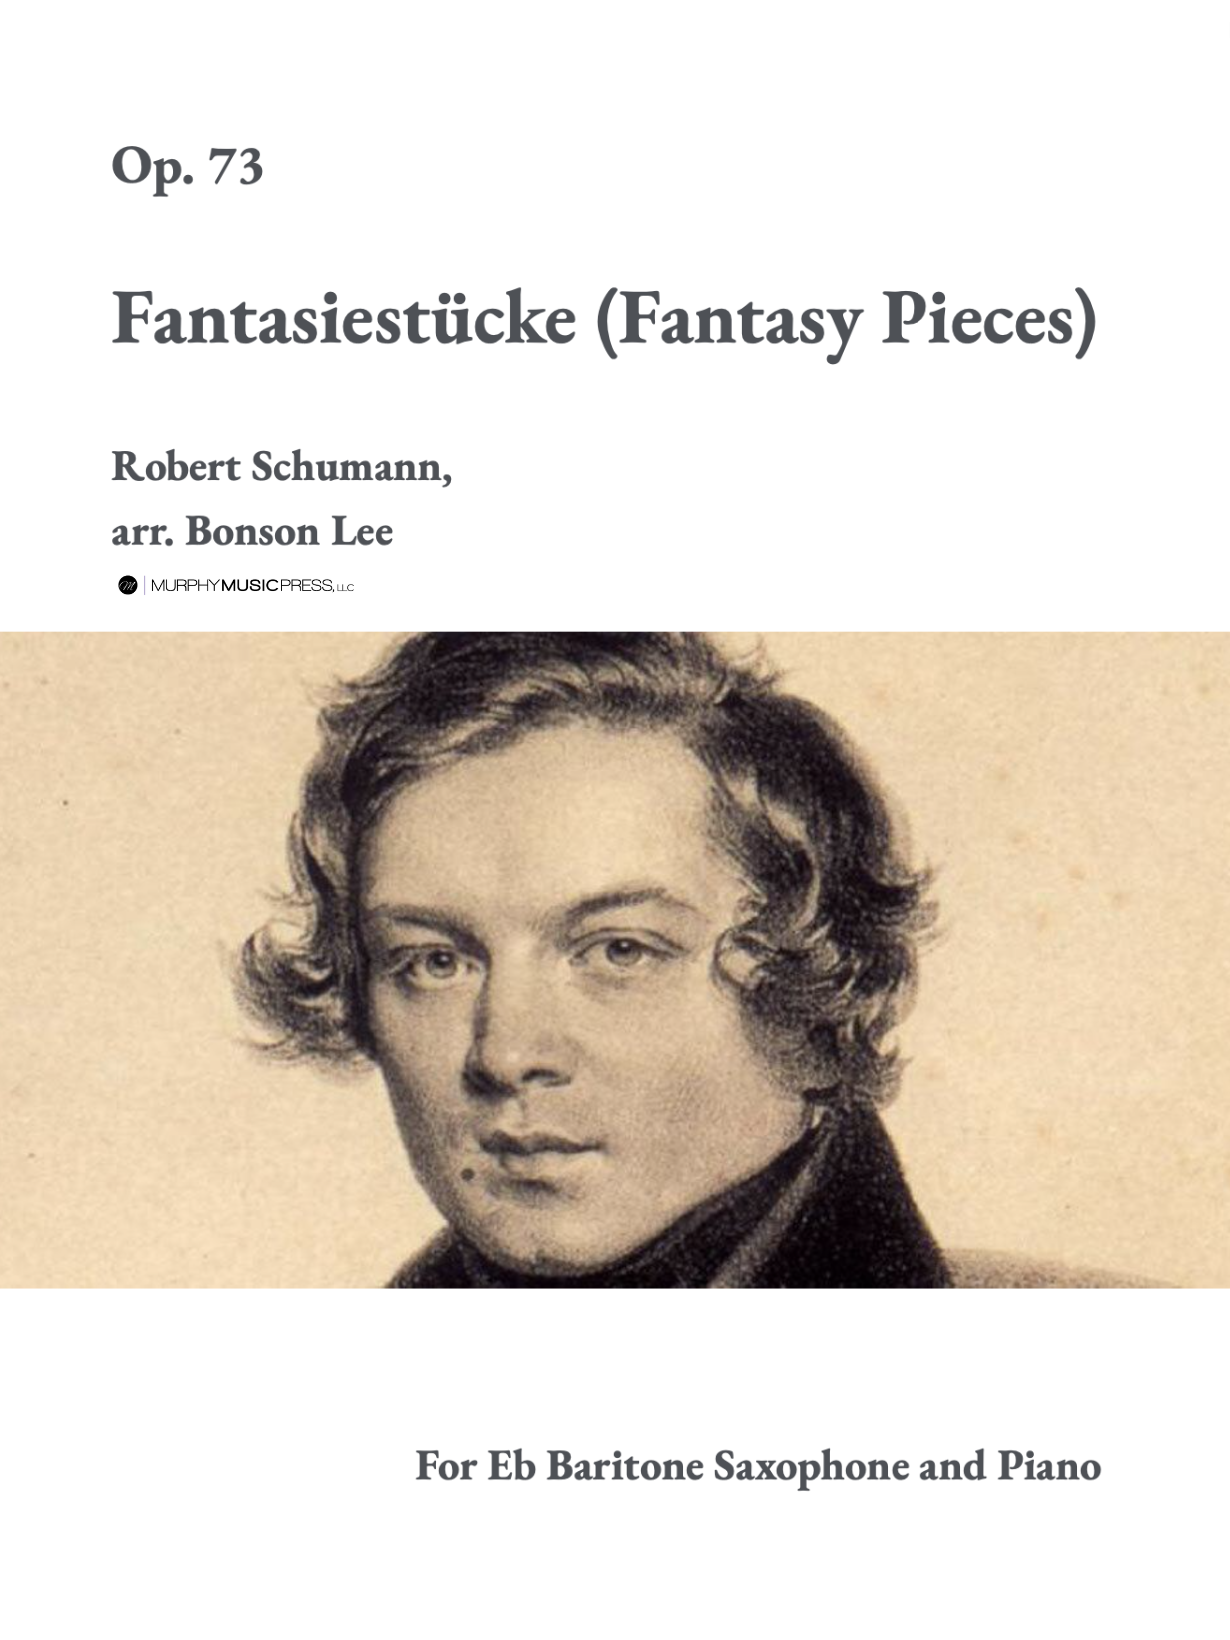 Fantasy Pieces-Bari Version by Schumann, arr. Bonson Lee